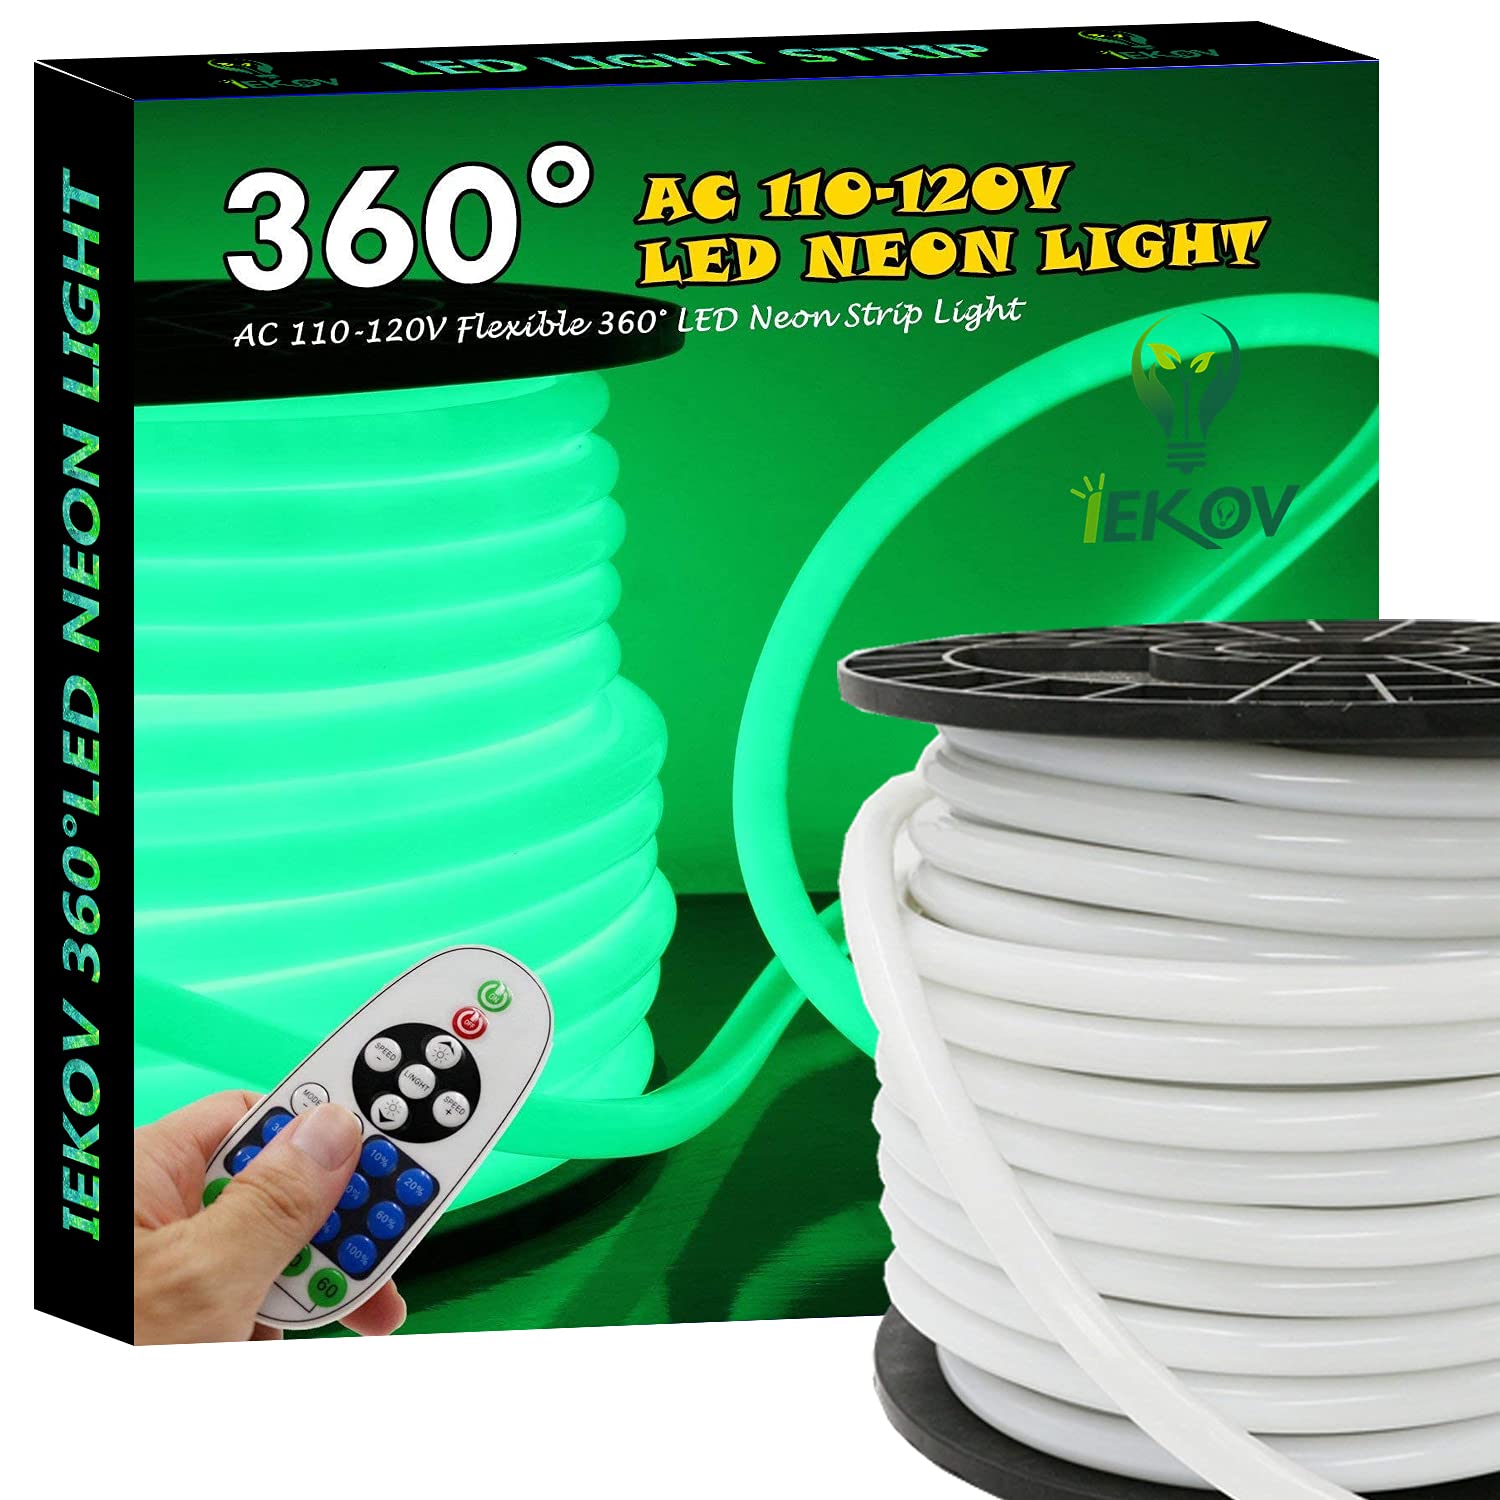 Upgrade 360 Led Neon Light Ac 110